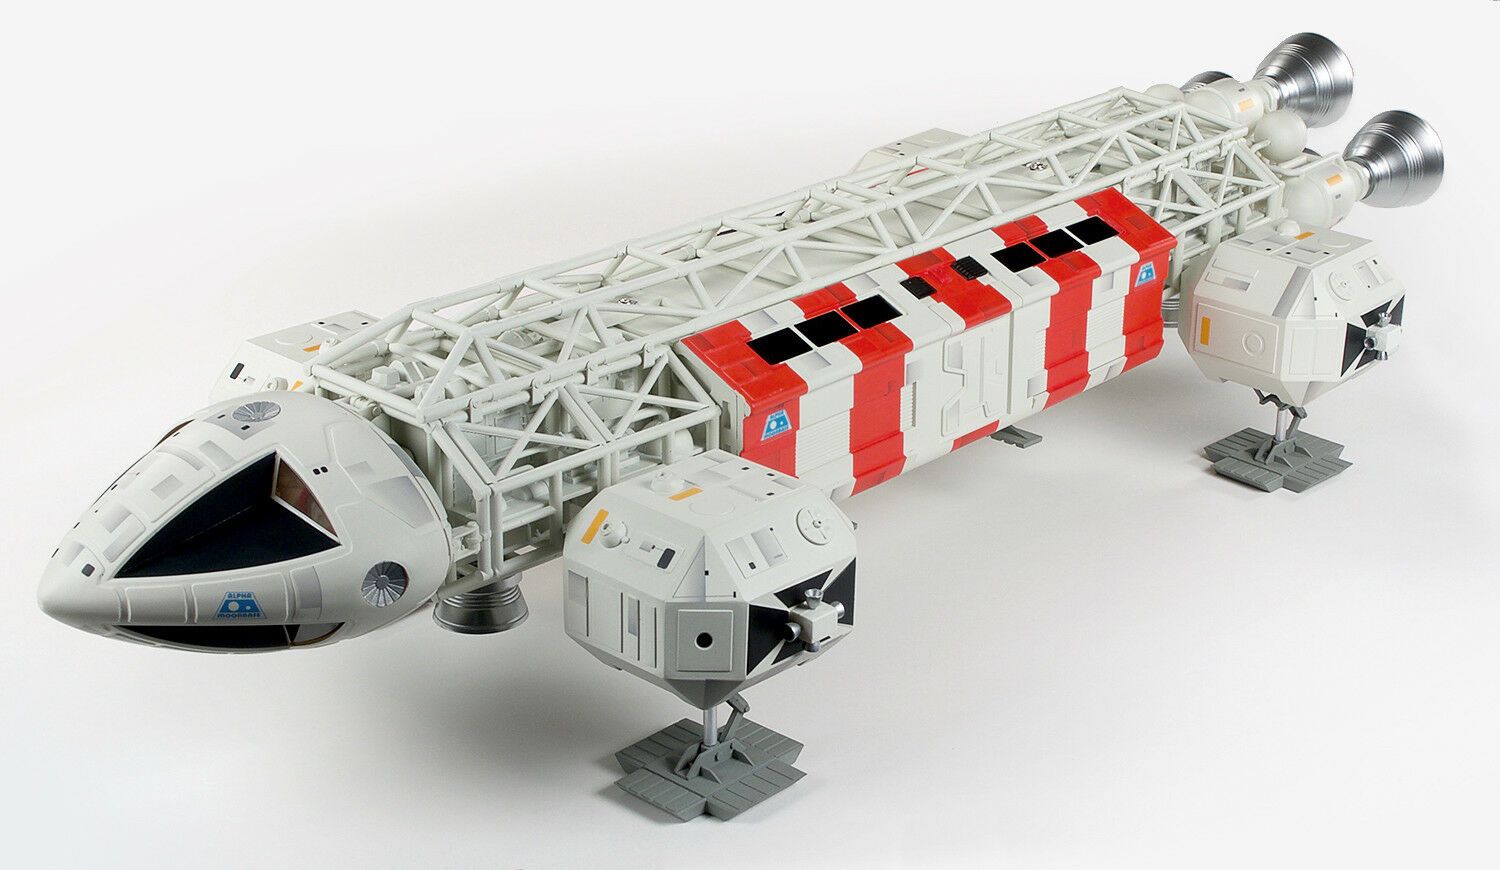 1/18 Scale Space:1999 Rescue Eagle Prebuilt Display Model